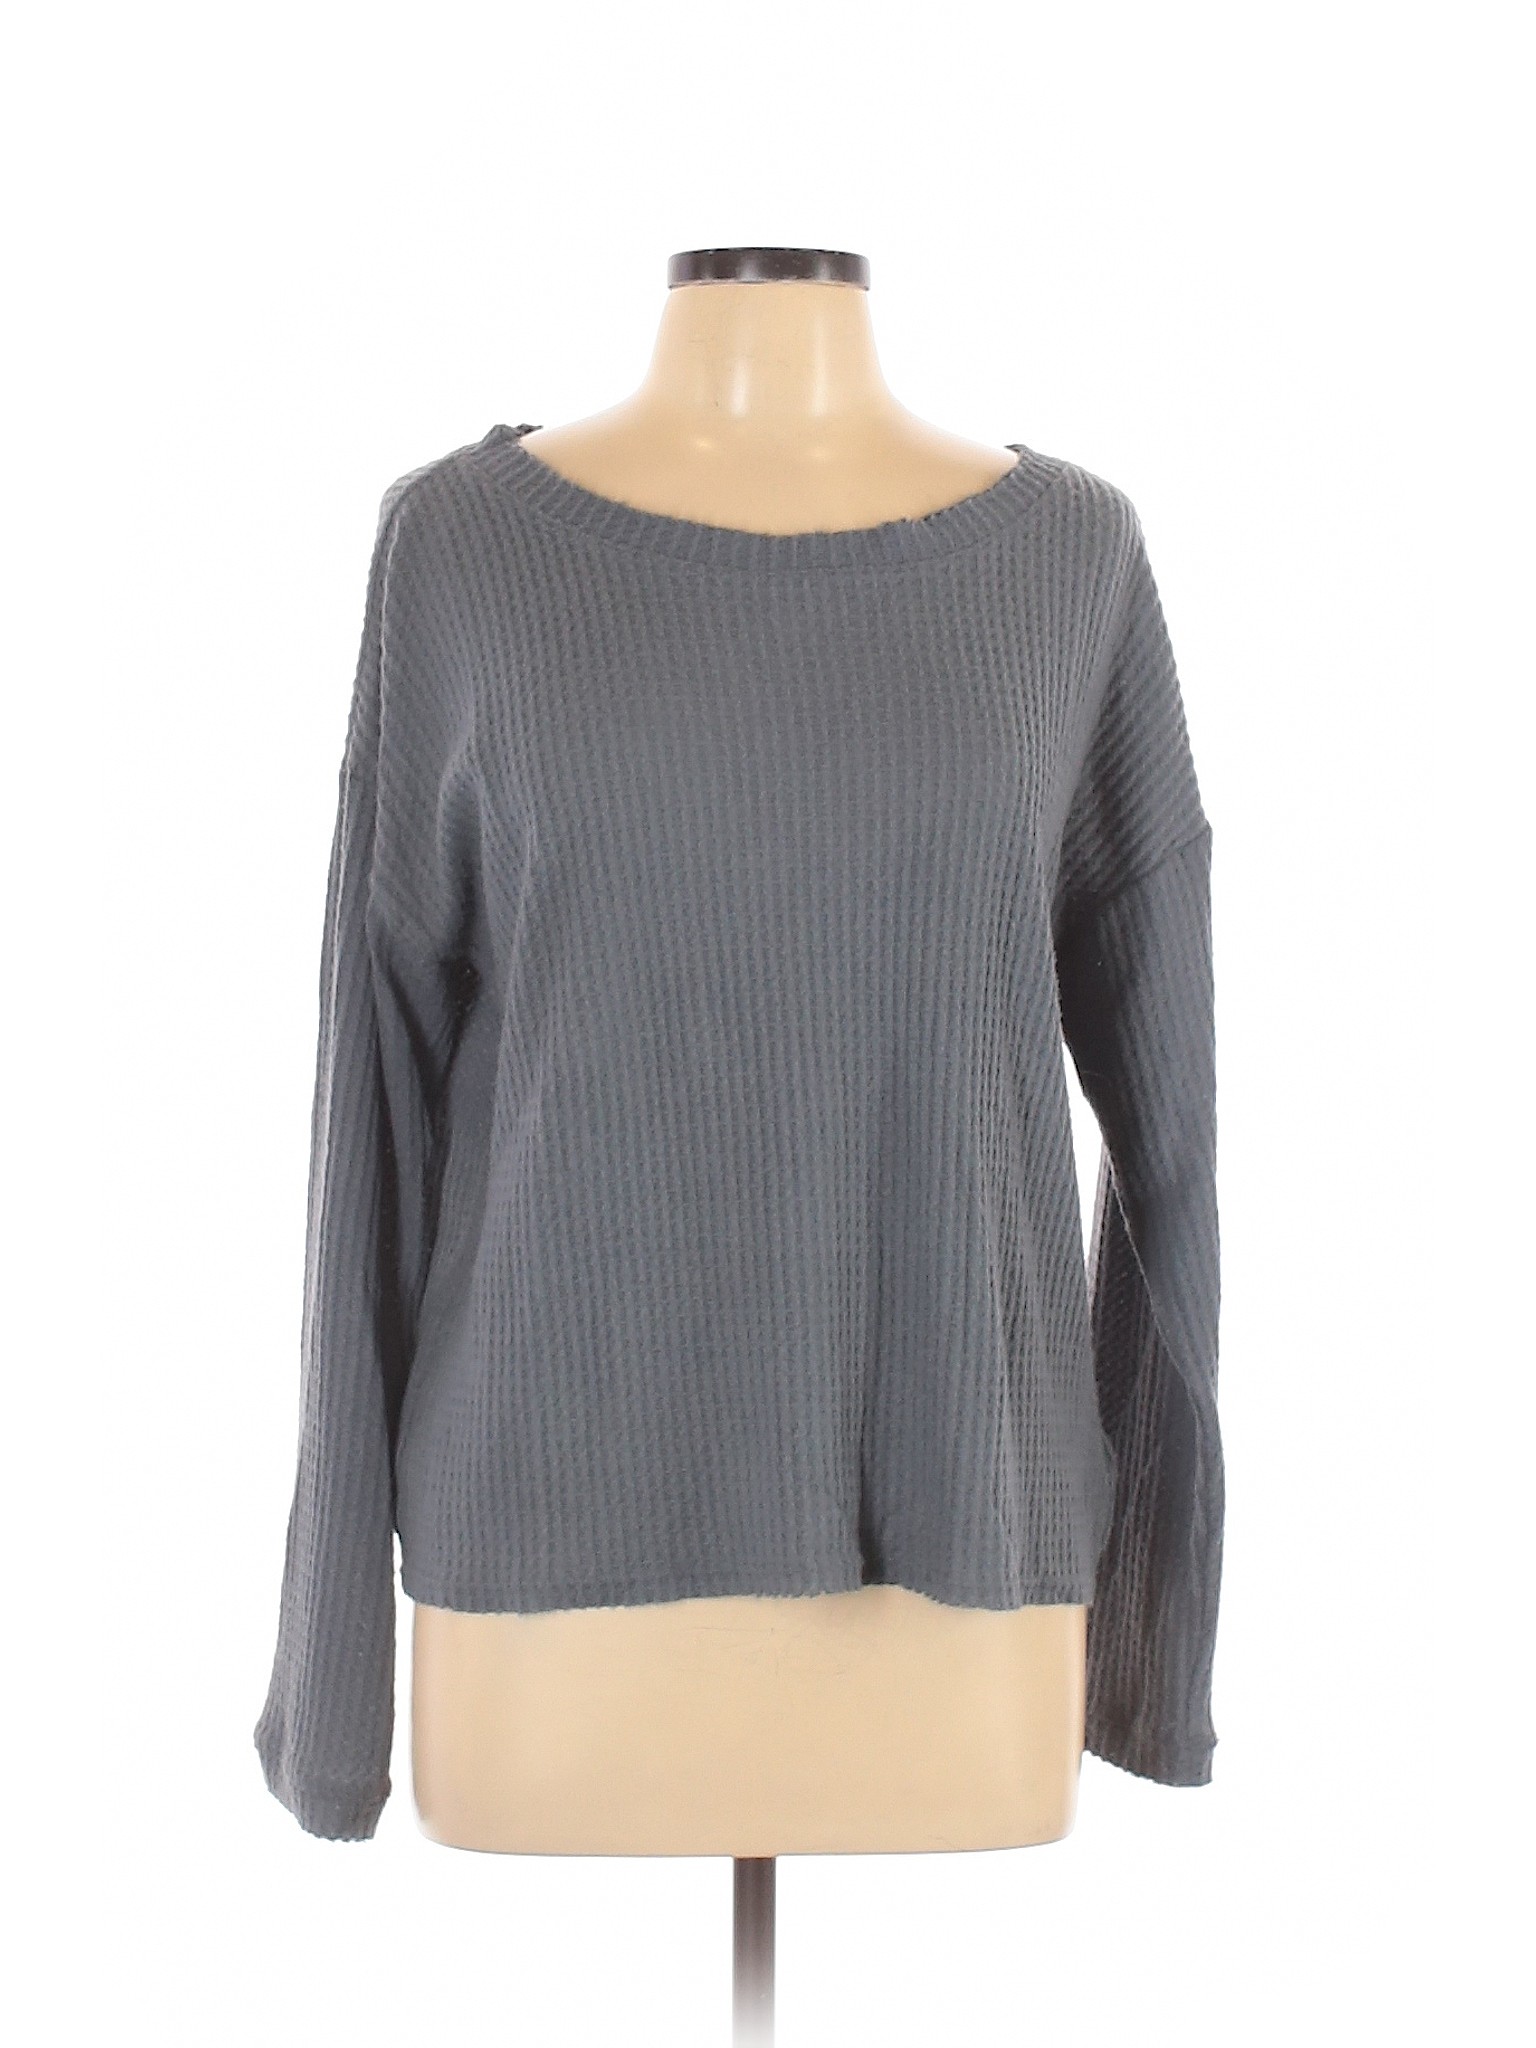 Socialite Women Gray Pullover Sweater L | eBay